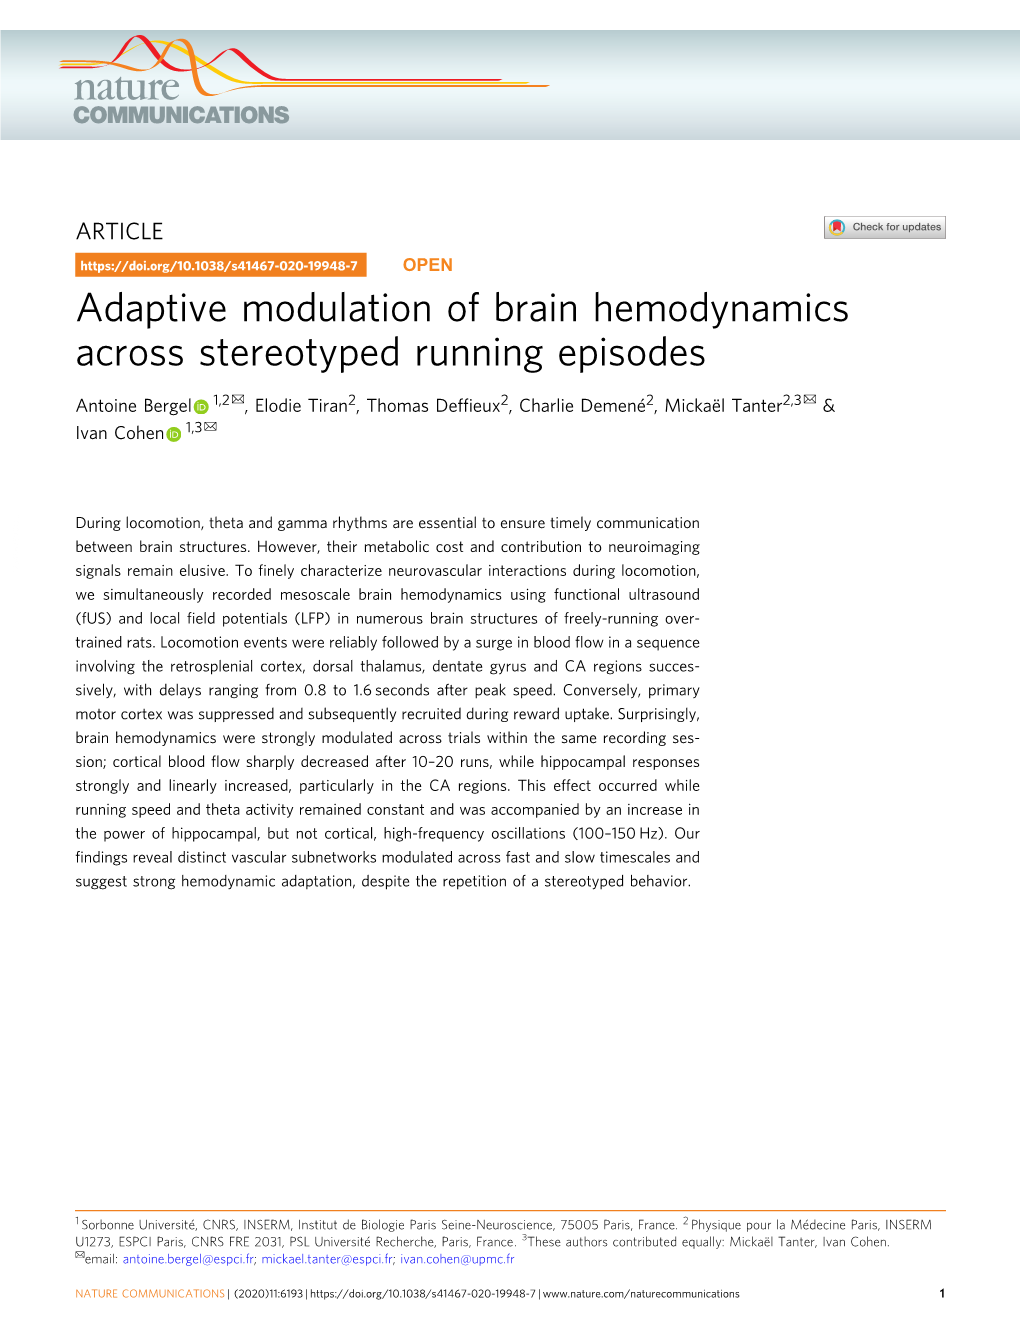 Adaptive Modulation of Brain Hemodynamics Across Stereotyped